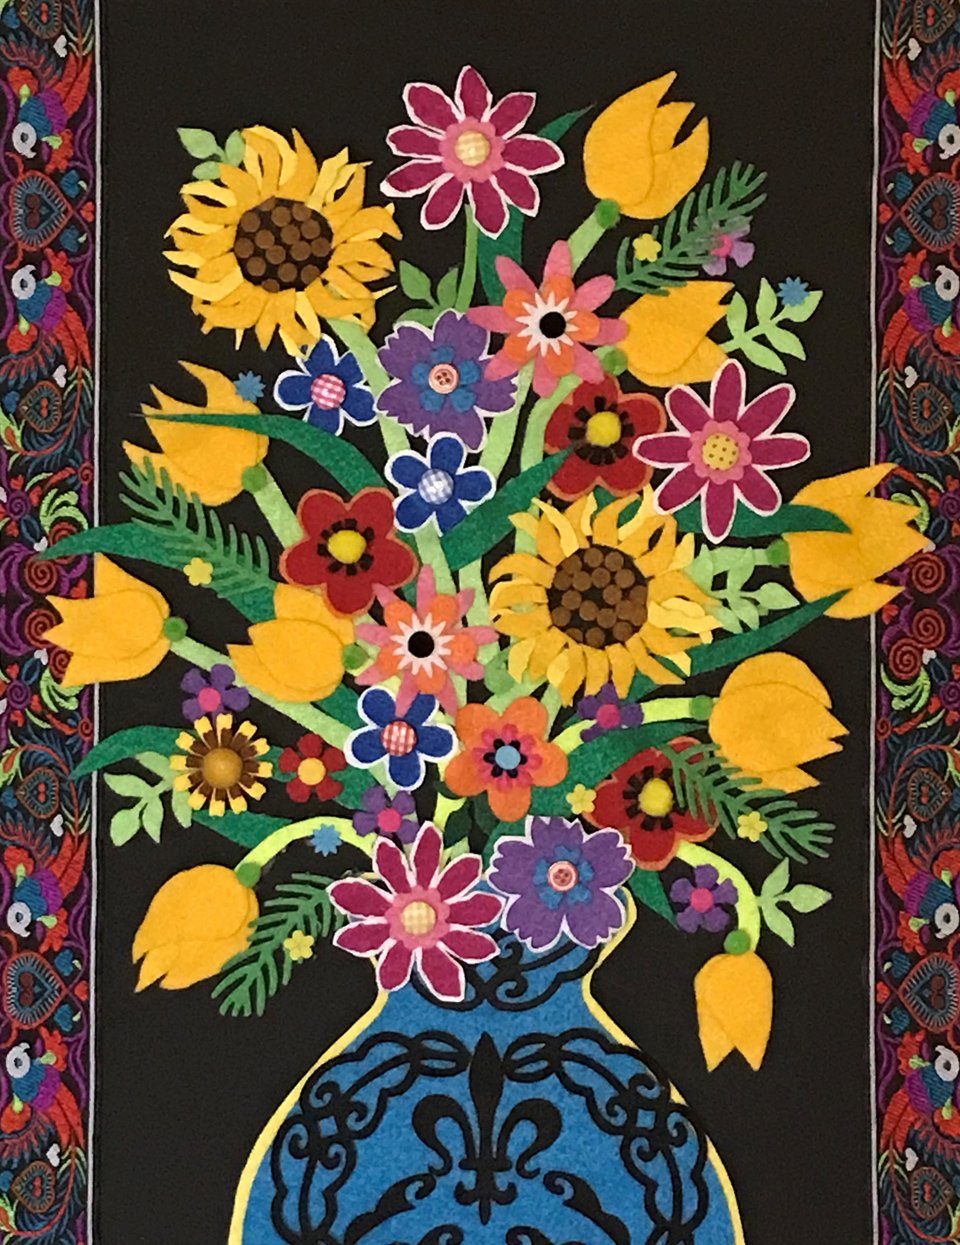 Judyann Affronti, "Flores de Primavera"